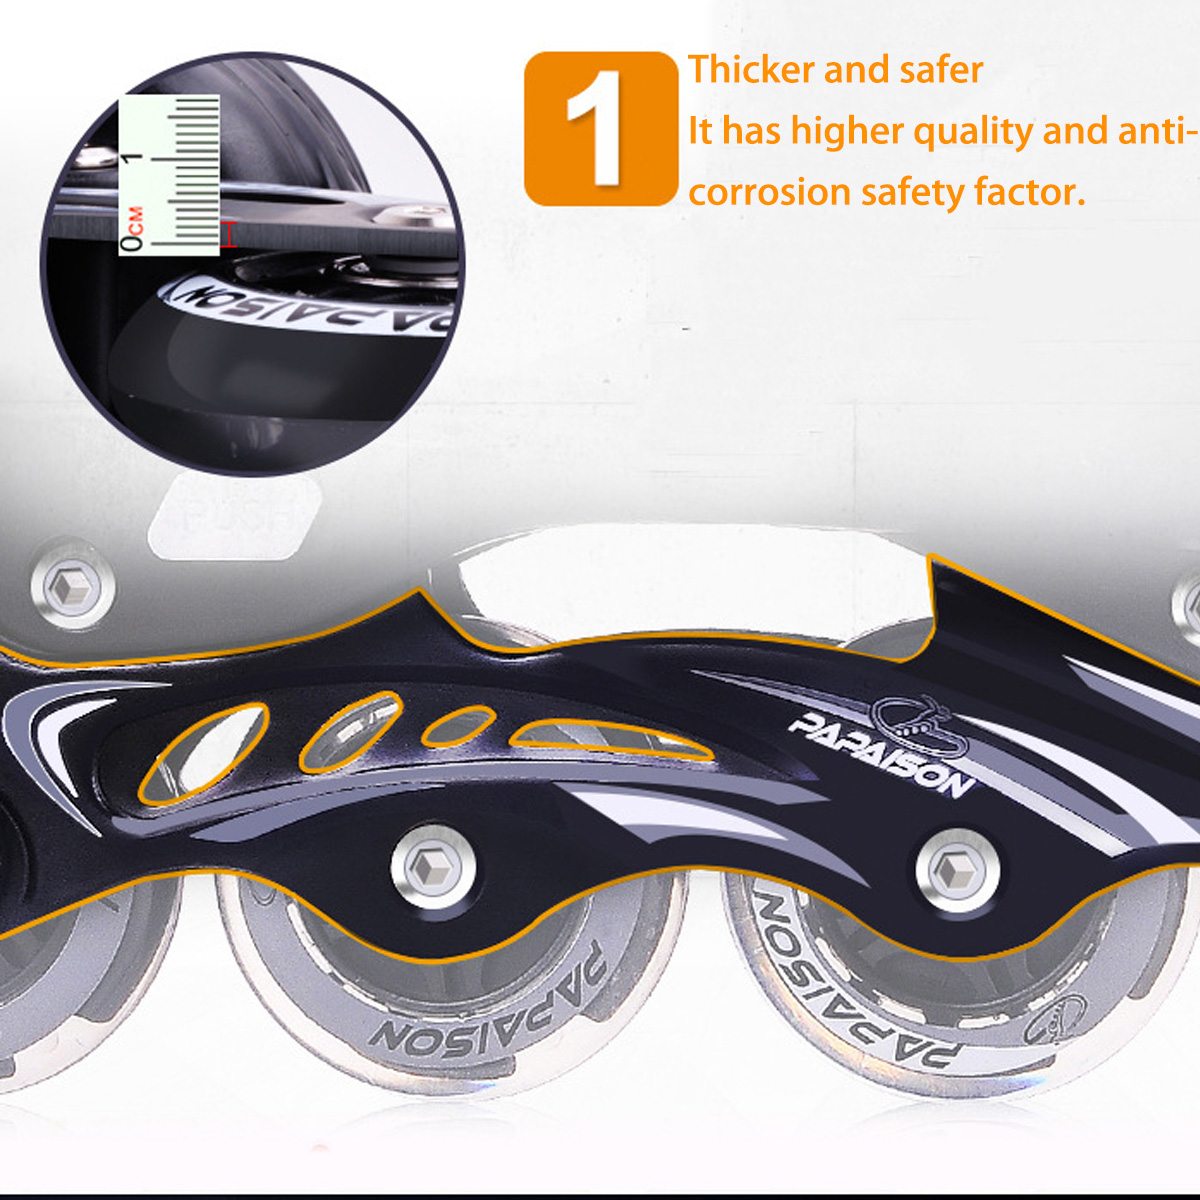 4-Wheels-Inline-Speed-Skates-Shoes-Hockey-Roller-Professional-Skates-Sneakers-Rollers-Skates-For-Adu-1733968-2